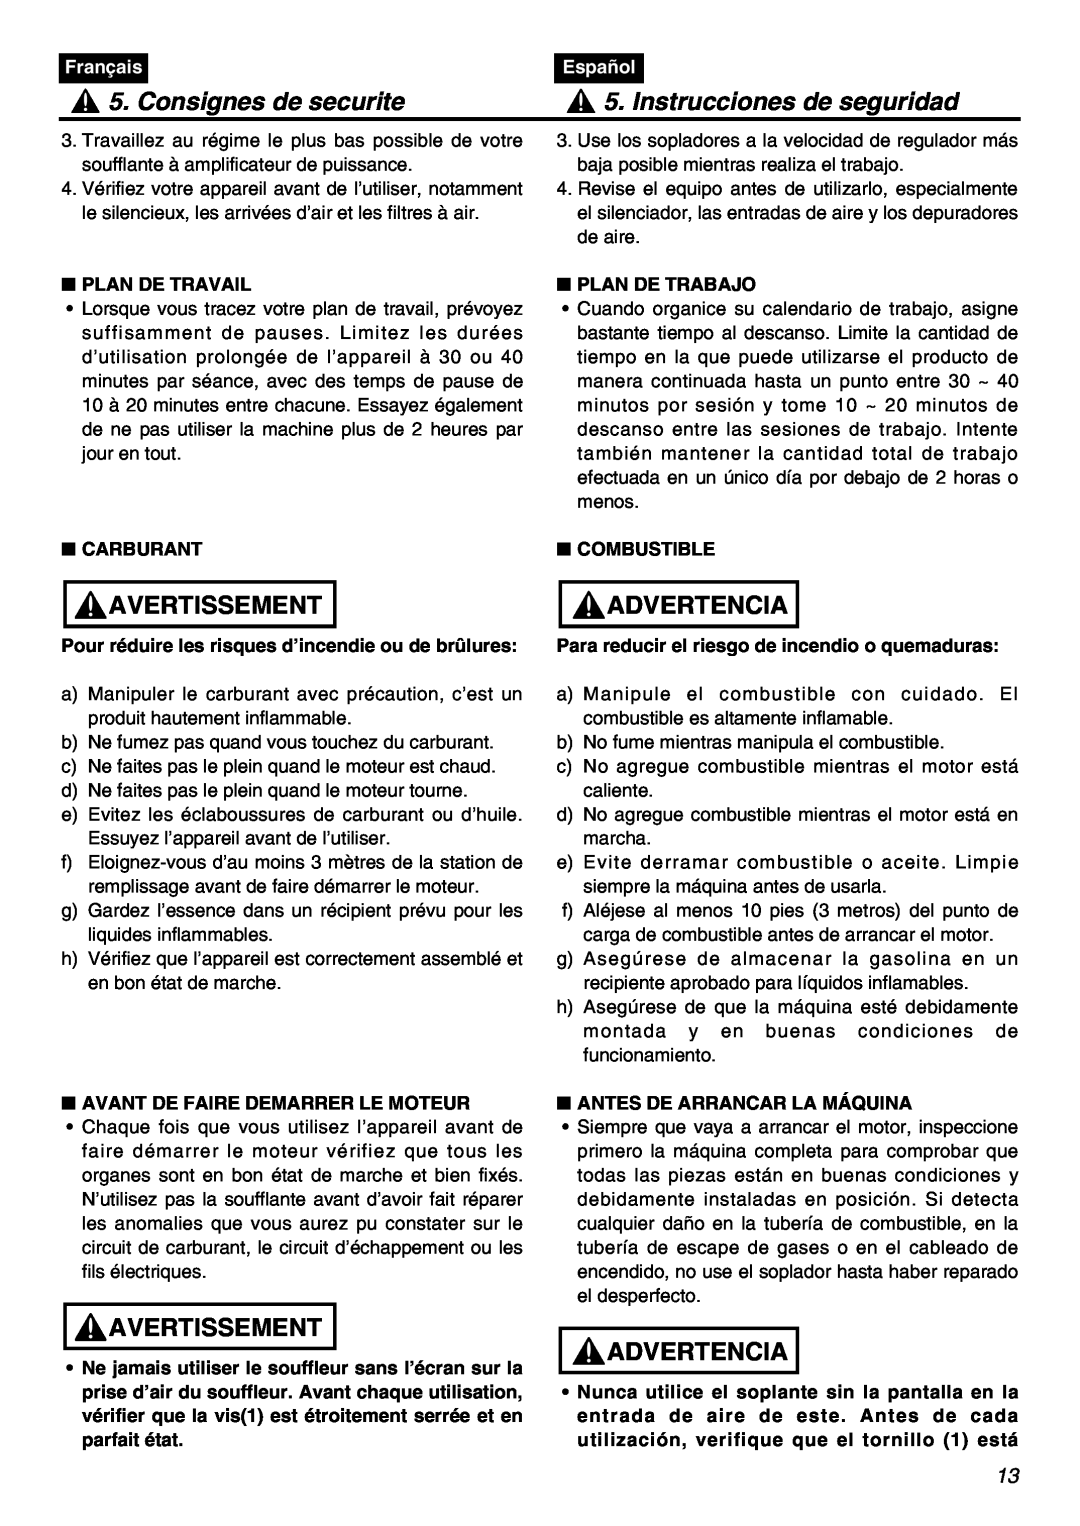 RedMax HBZ2601 Consignes de securite, Instrucciones de seguridad, Avertissement, Advertencia, Français, Español, Carburant 